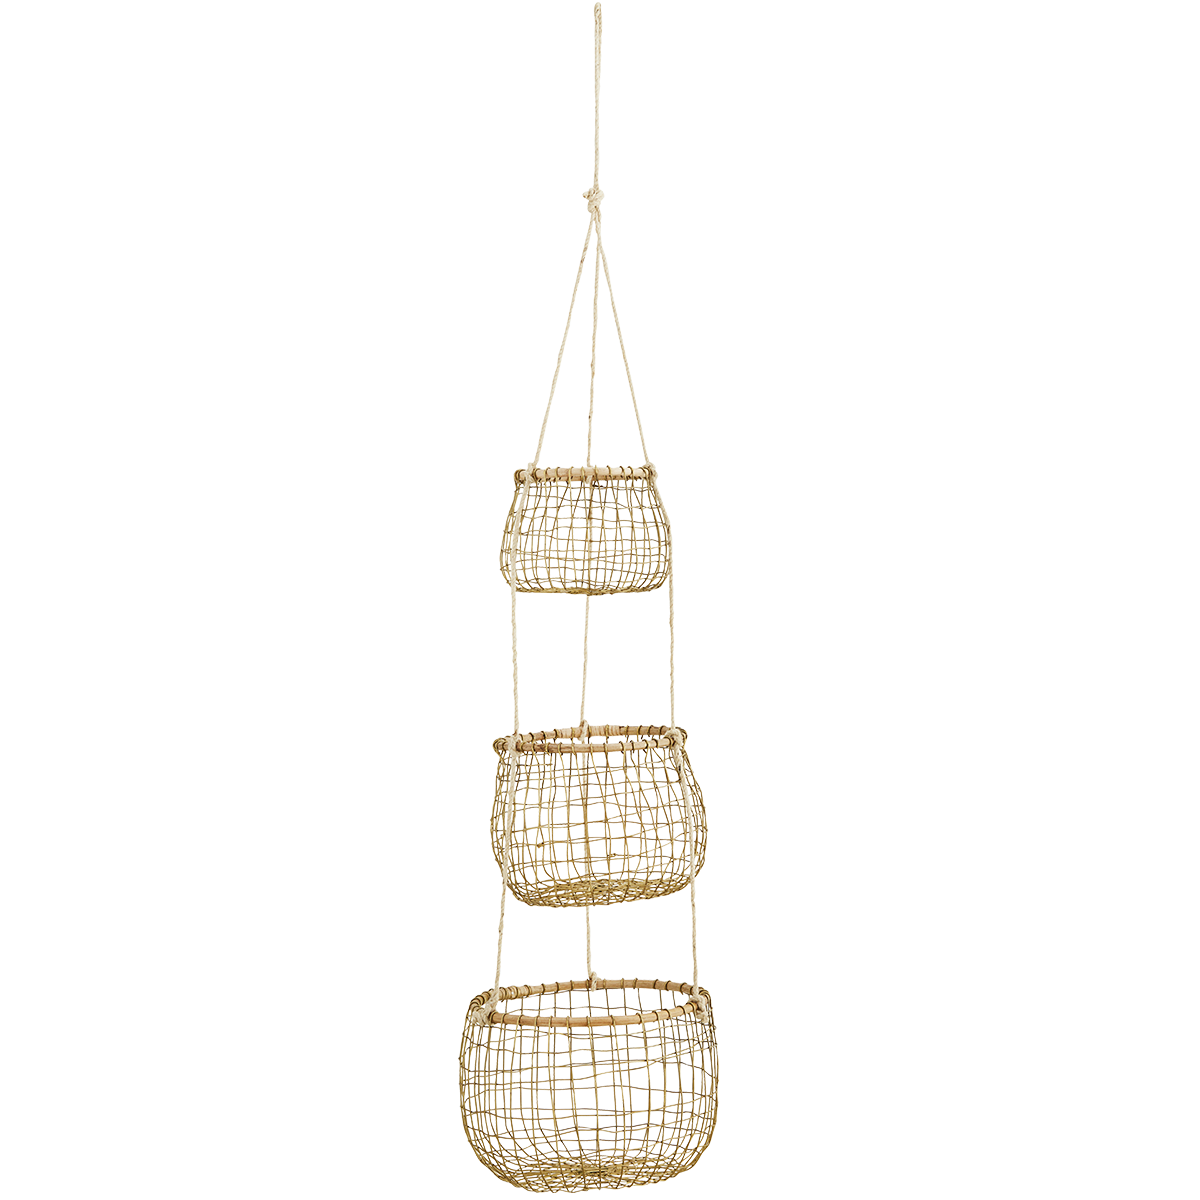 Hanging wire baskets w/ cane